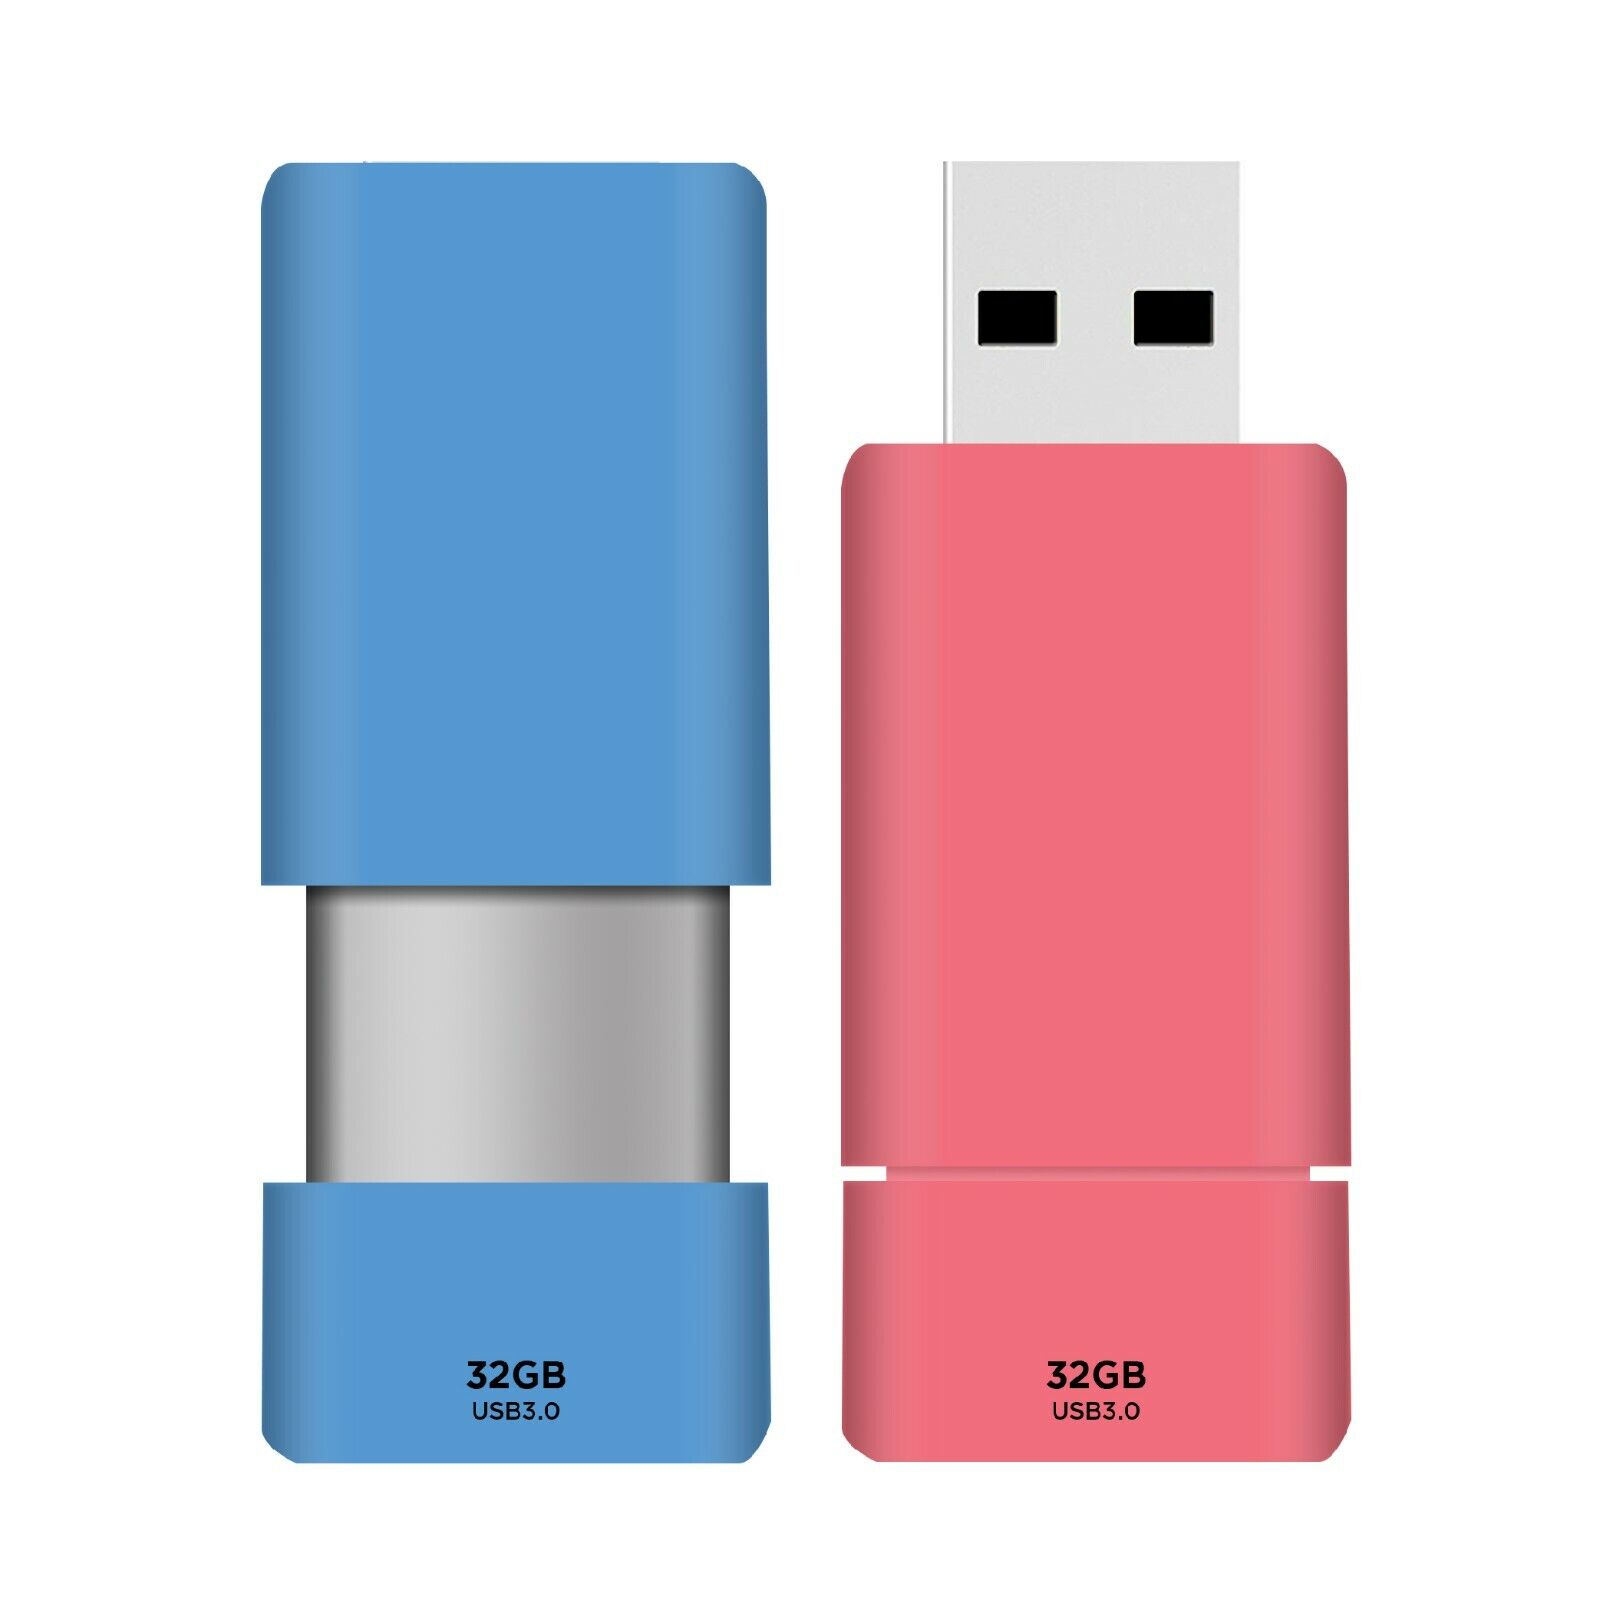 Gigastone 32GB USB 3.0 Flash Drive, 2 Pack -colors combination shipped at random